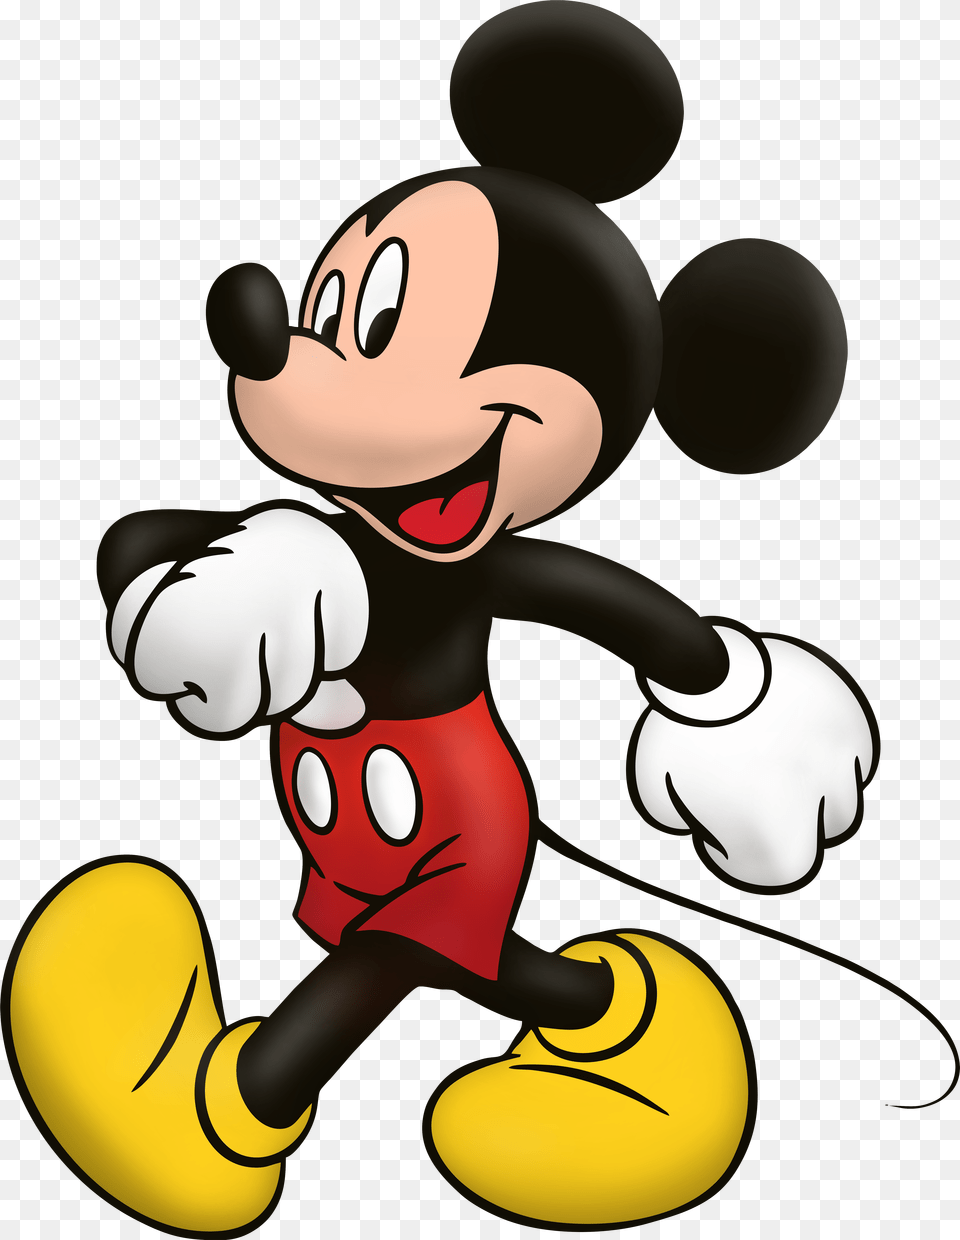 Mickey Mouse Cartoon Image Cartoon Png